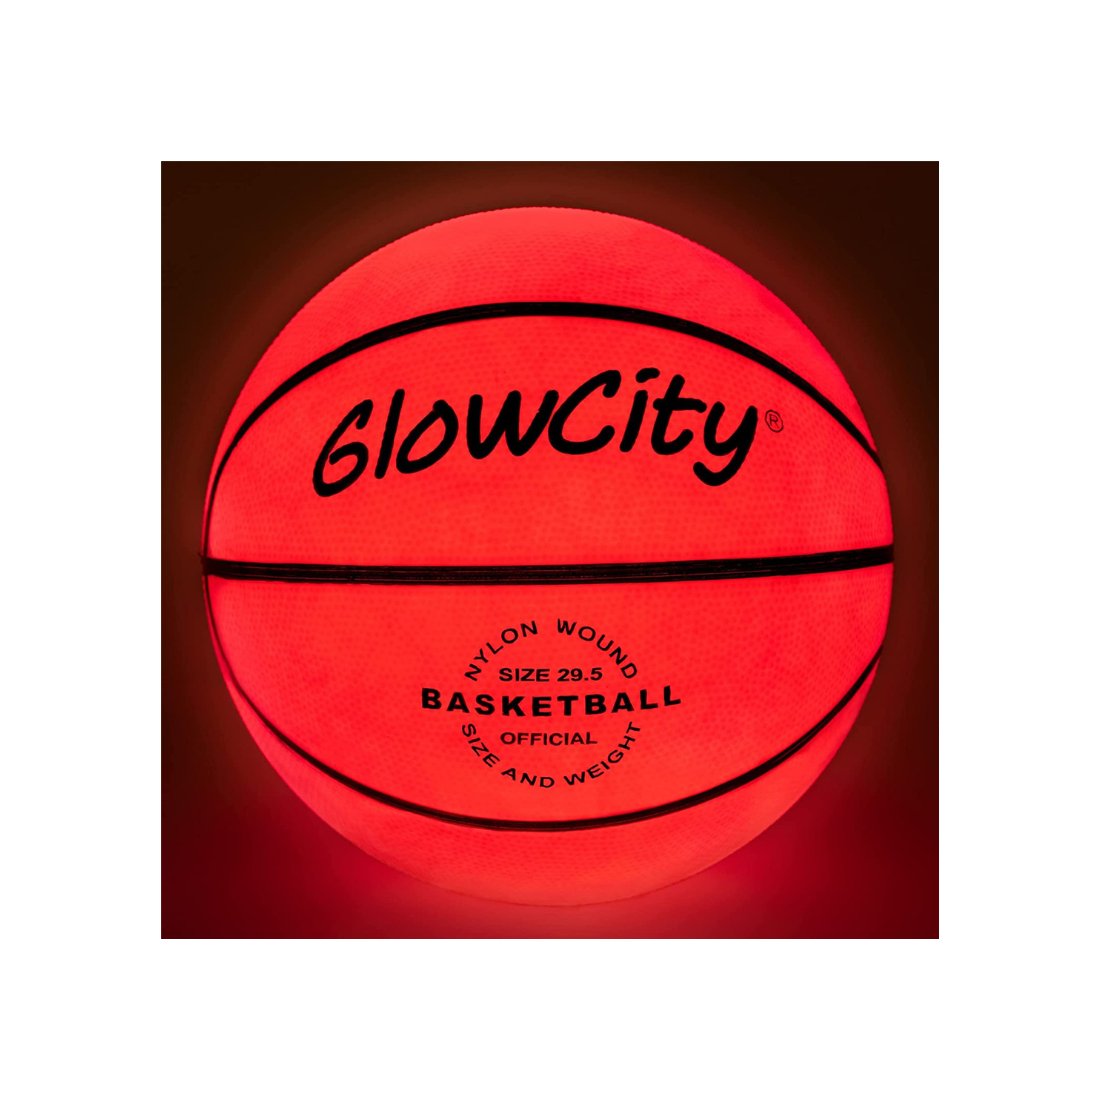 GlowCity Glow in The Dark Basketball - The California Beach Co.